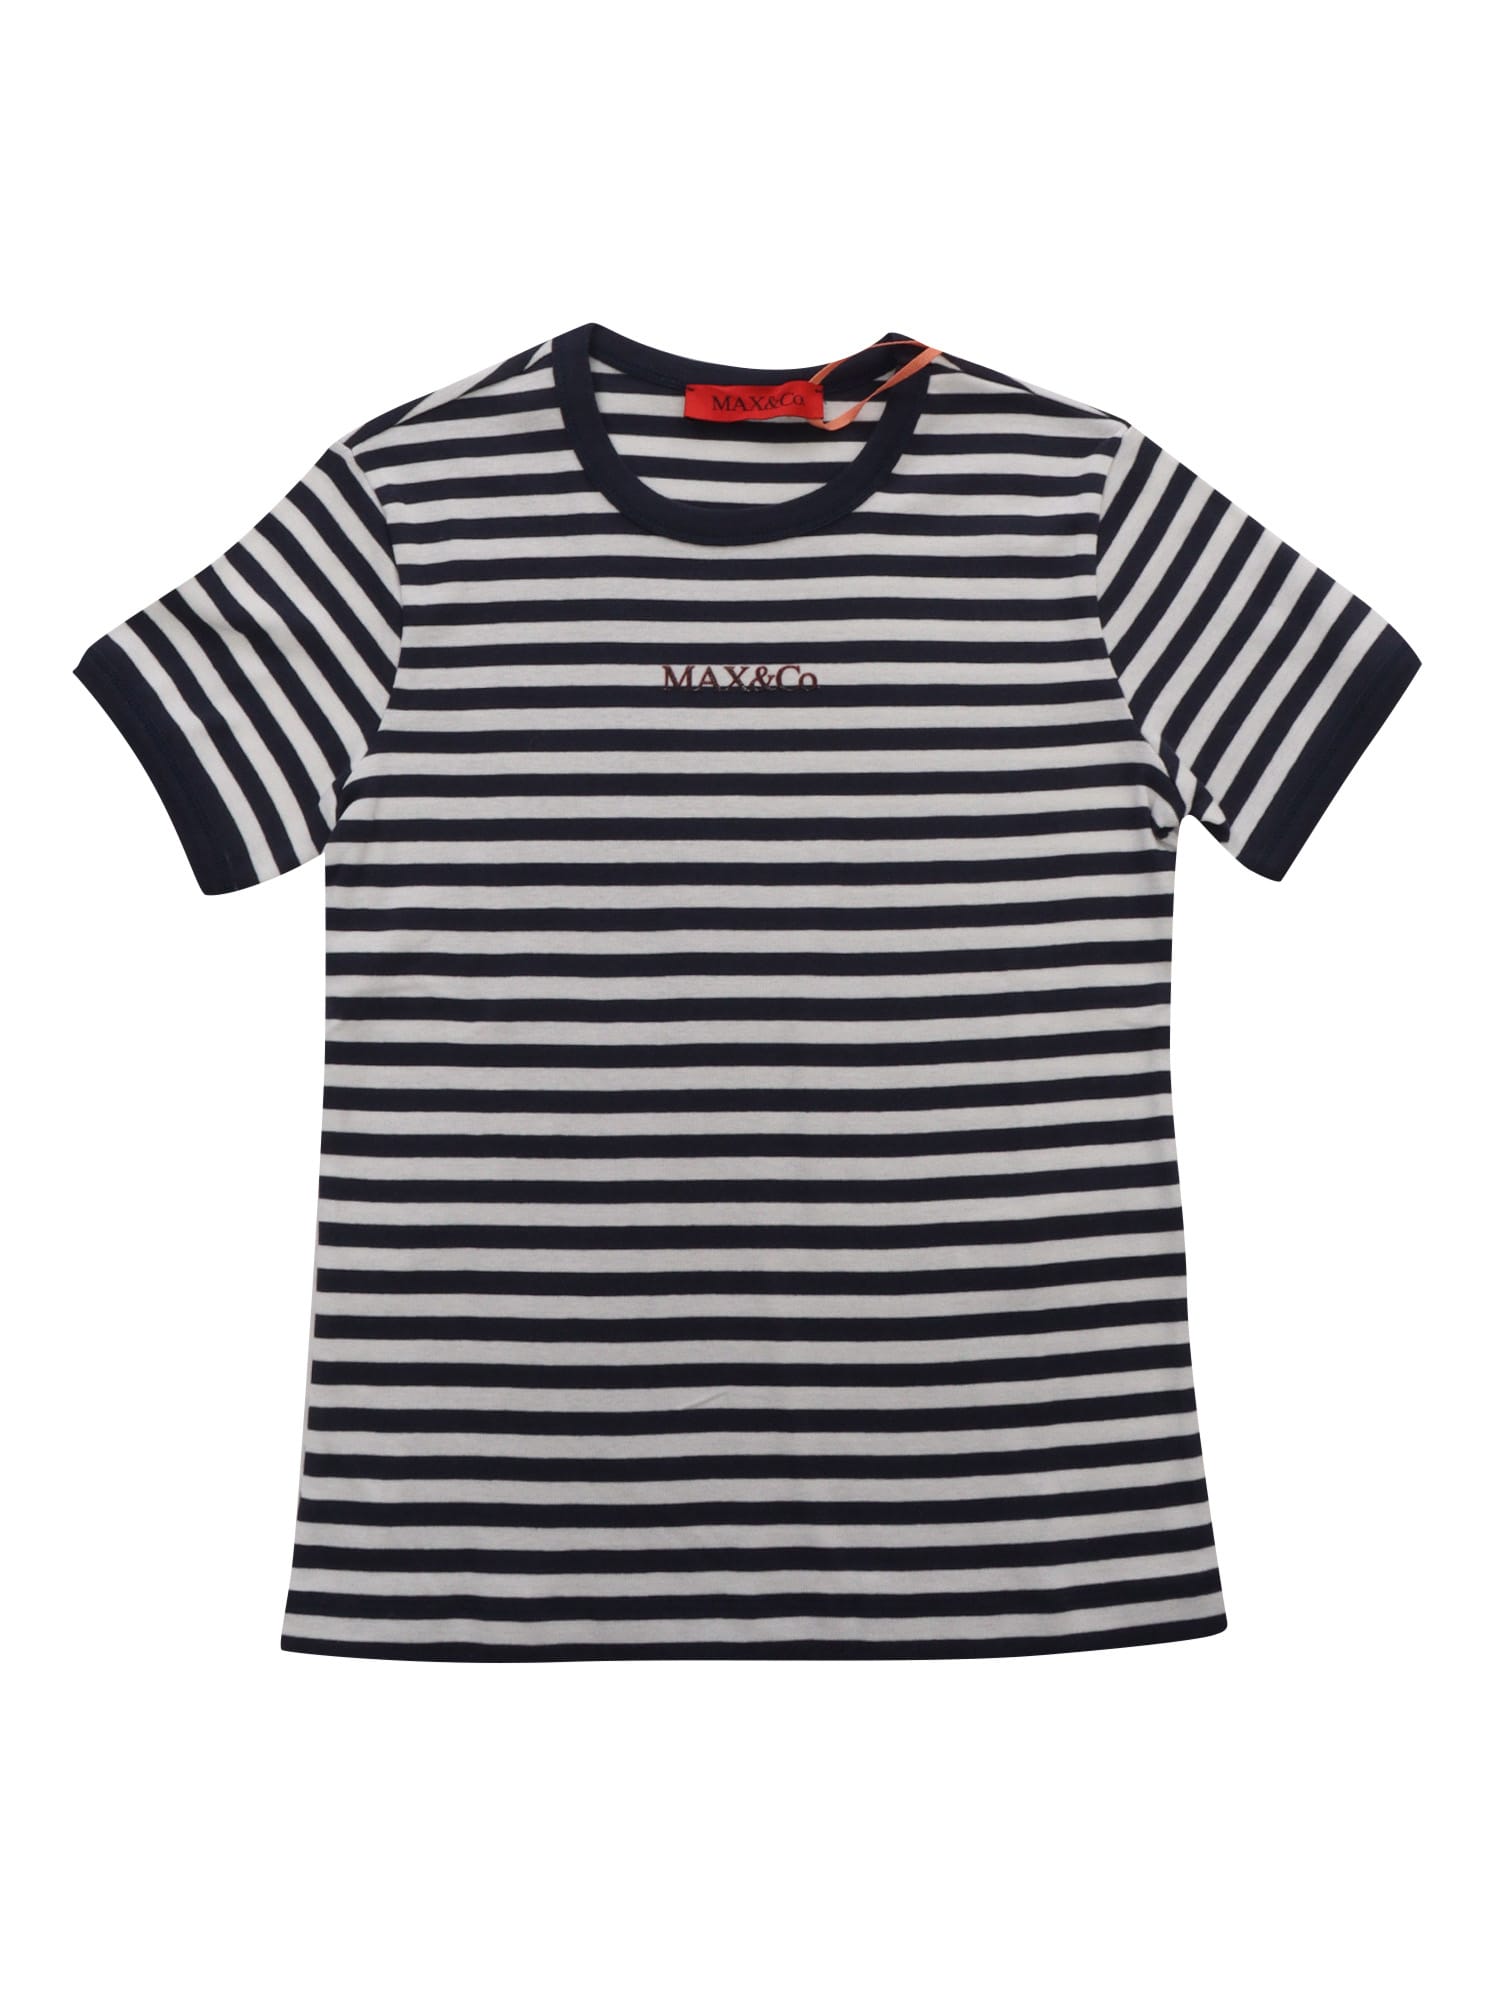 Max&amp;co. Kids' Black Striped T-shirt